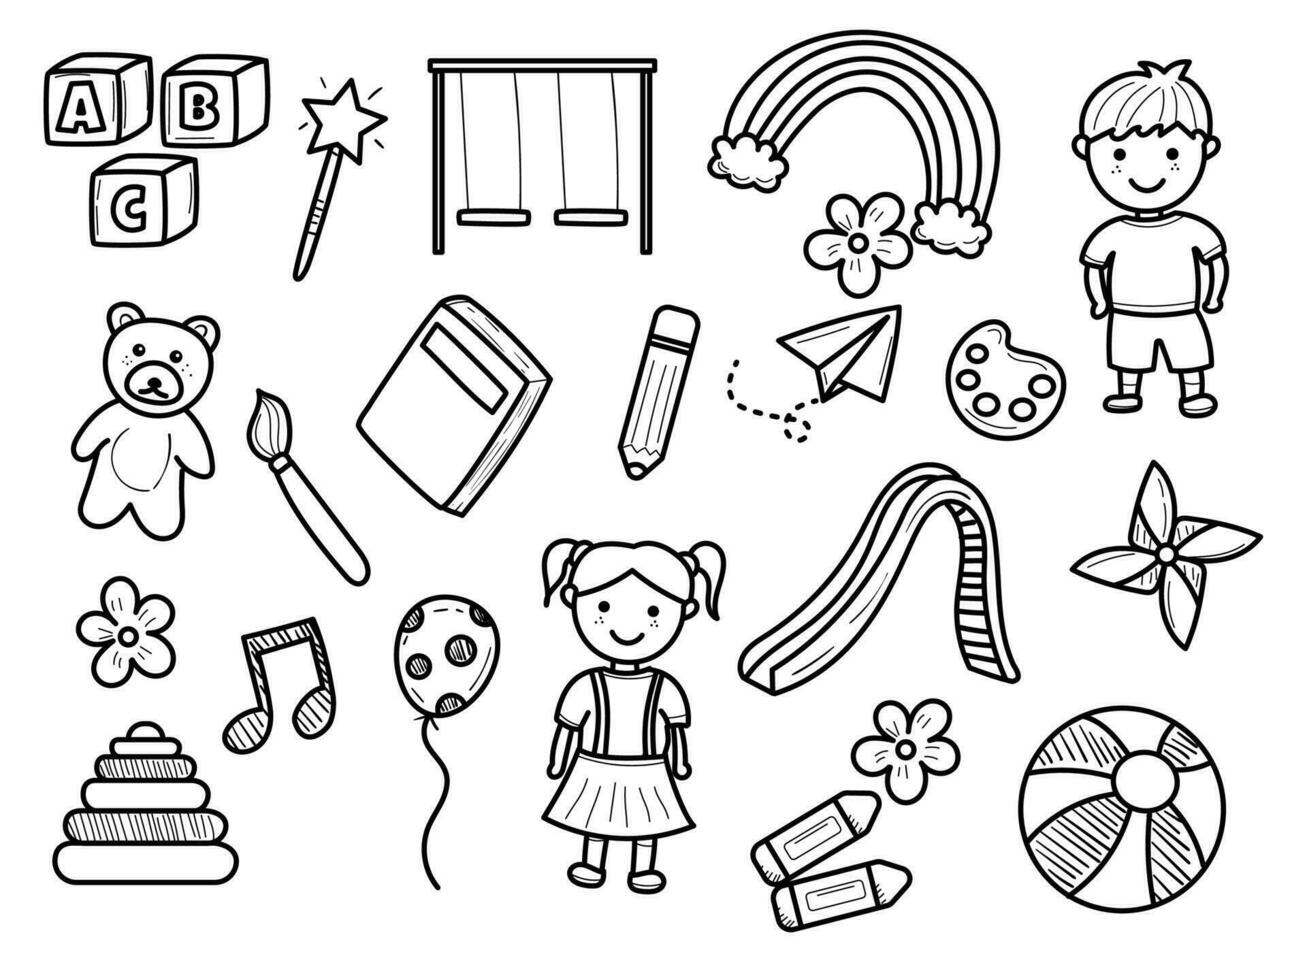 Set of kindergarten doodles illustration isolated on white background. Hand-drawn kindergarten vector elements